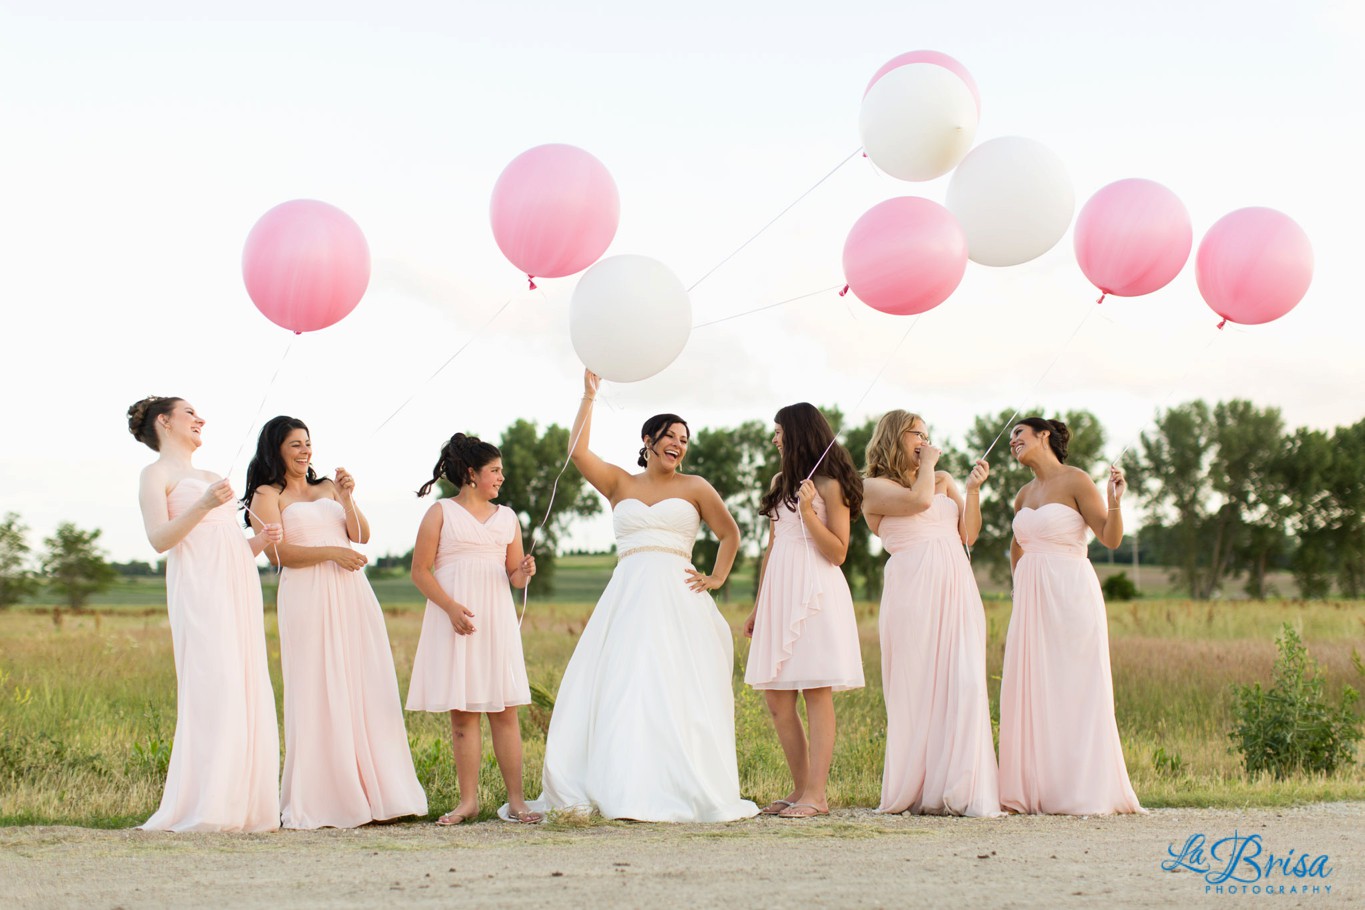 Wedding Bridesmaids with Balloons Concordia Kansas La Brisa Photography Emma York